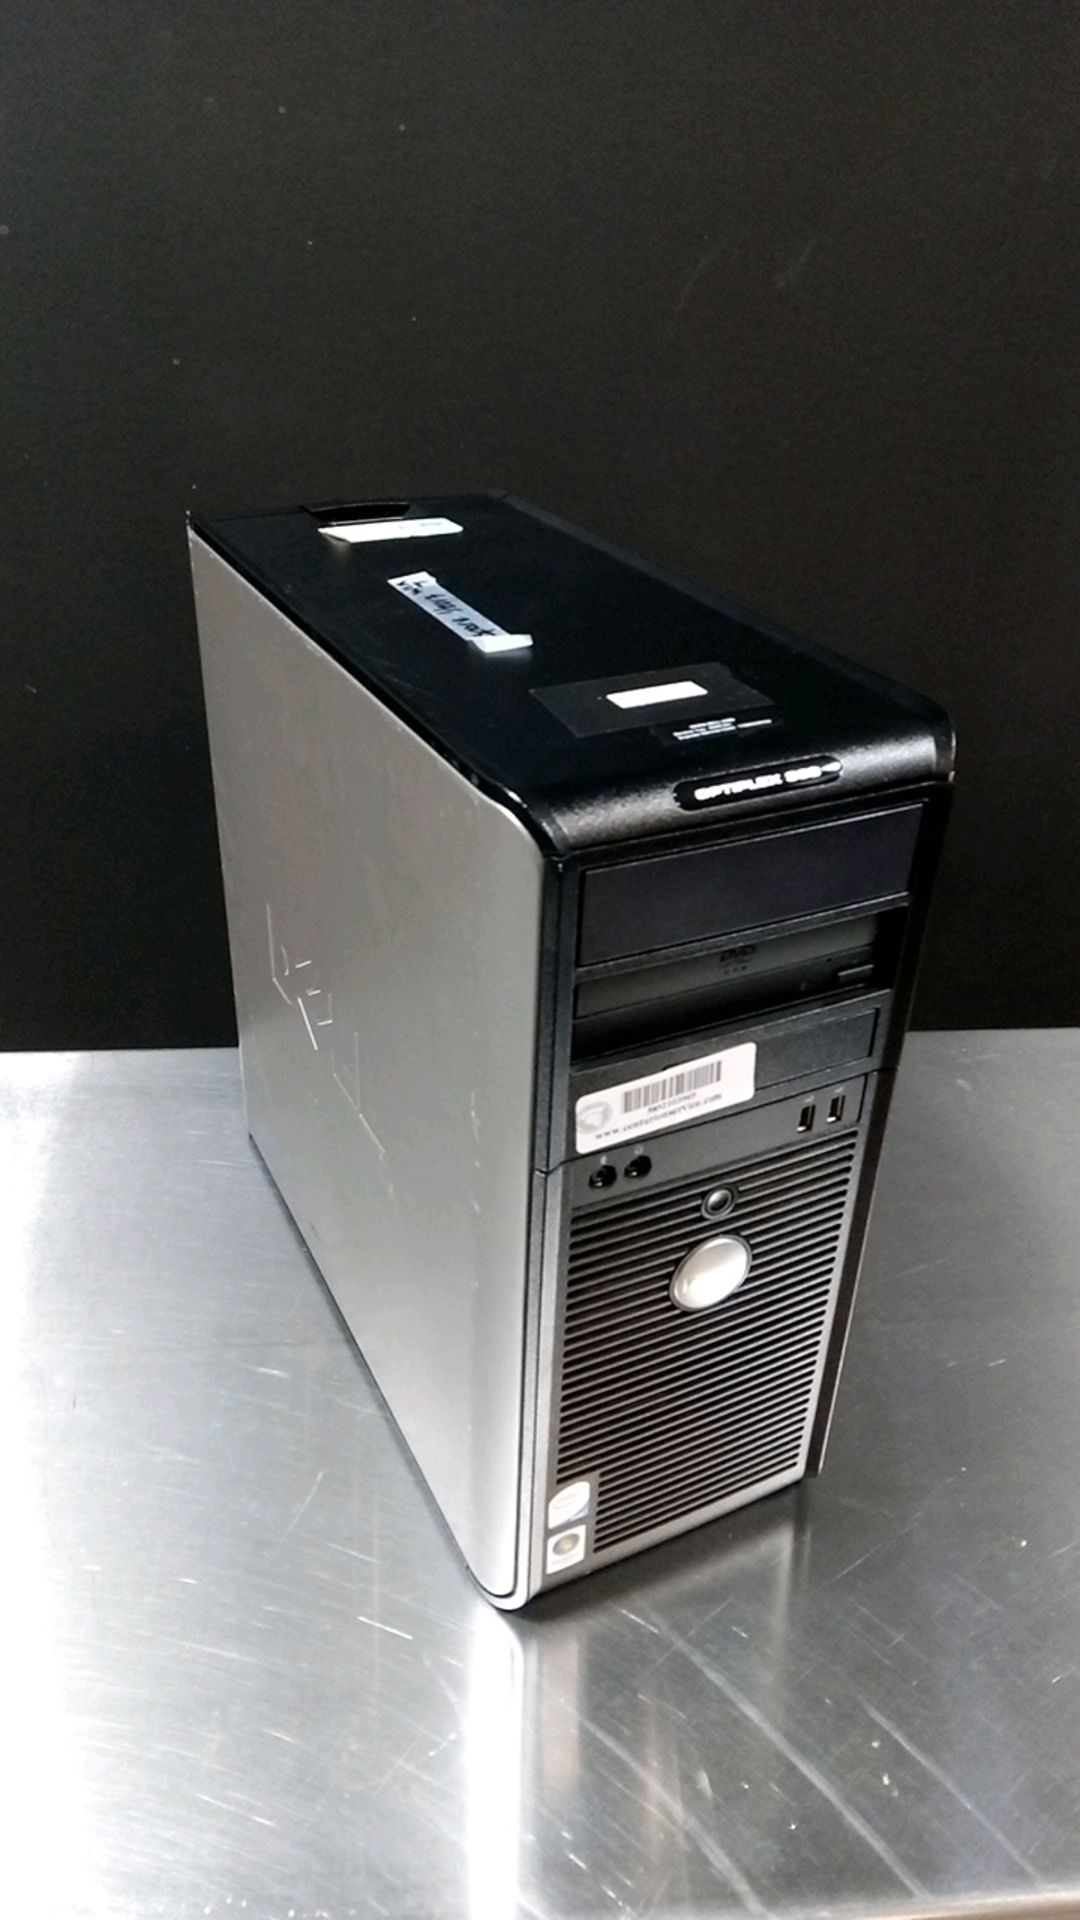 HP OPTIPLEX 330 DESKTOP COMPUTER LOCATED AT: 2440 GREENLEAF AVE, ELK GROVE VILLAGE IL